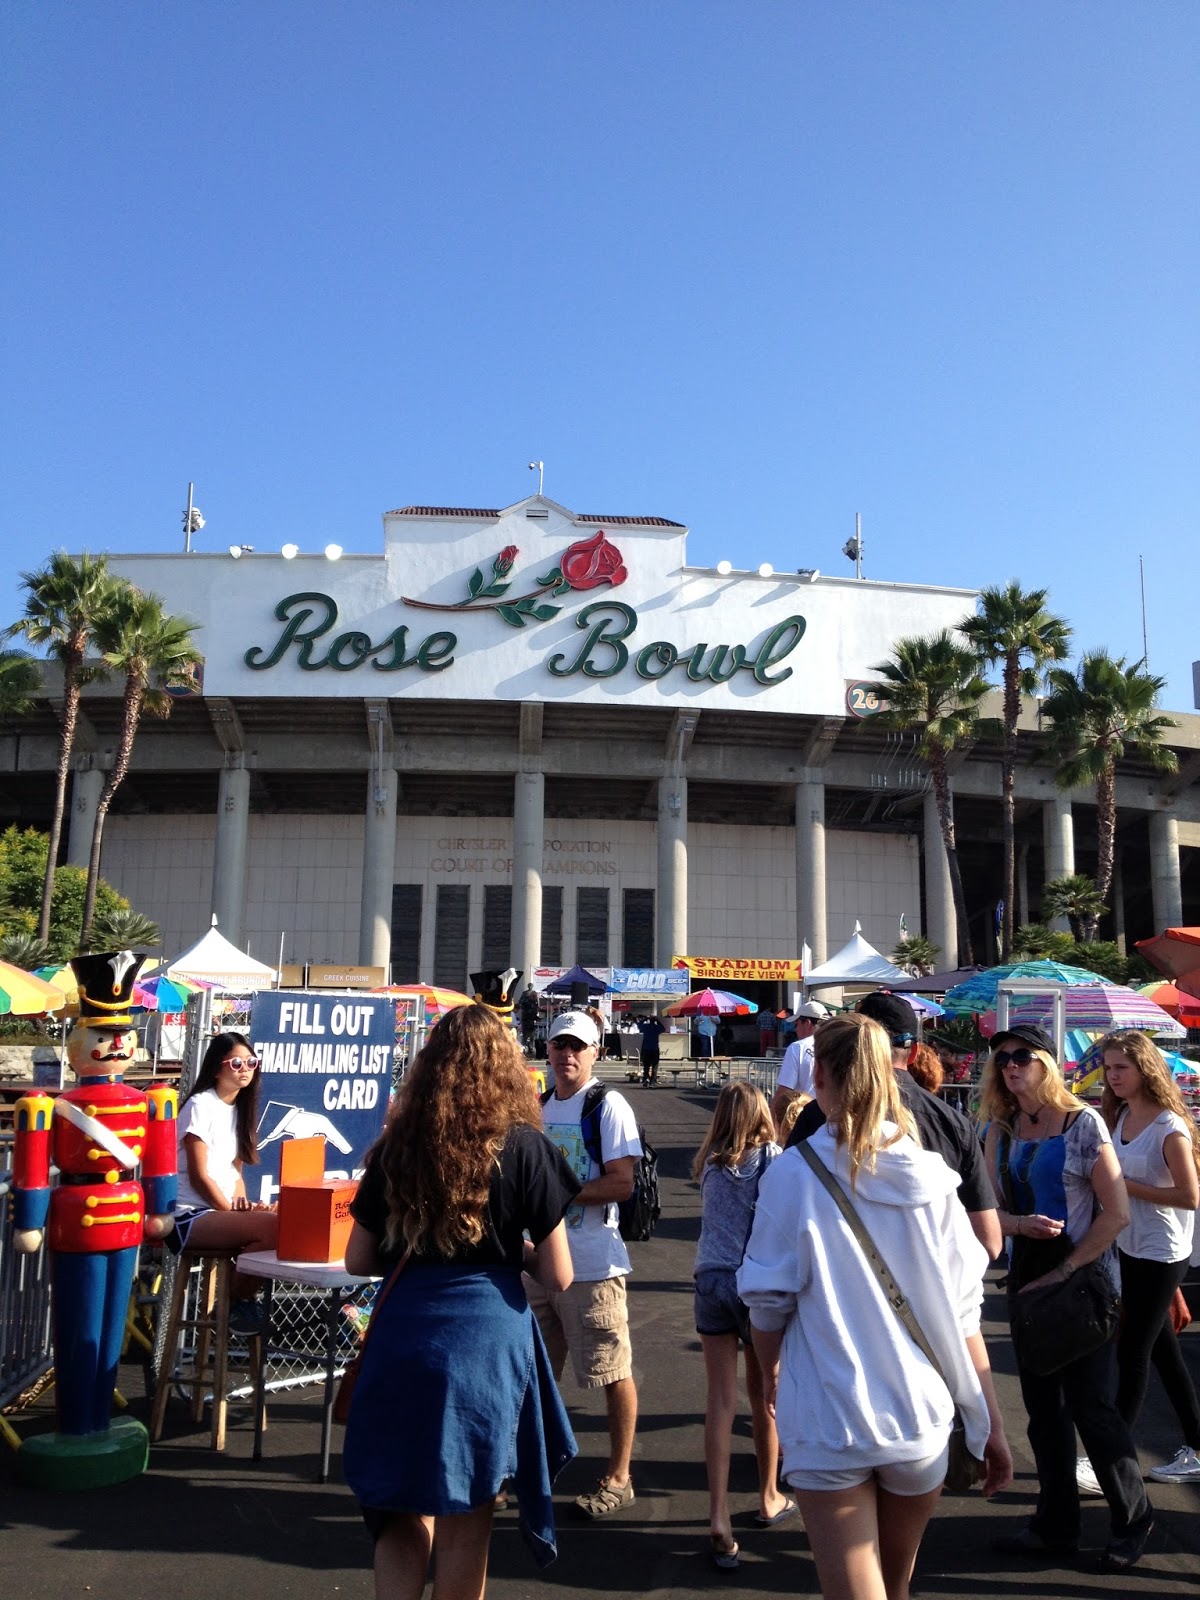 The Pasadena [Rose Bowl] Flea Market (and coming home)